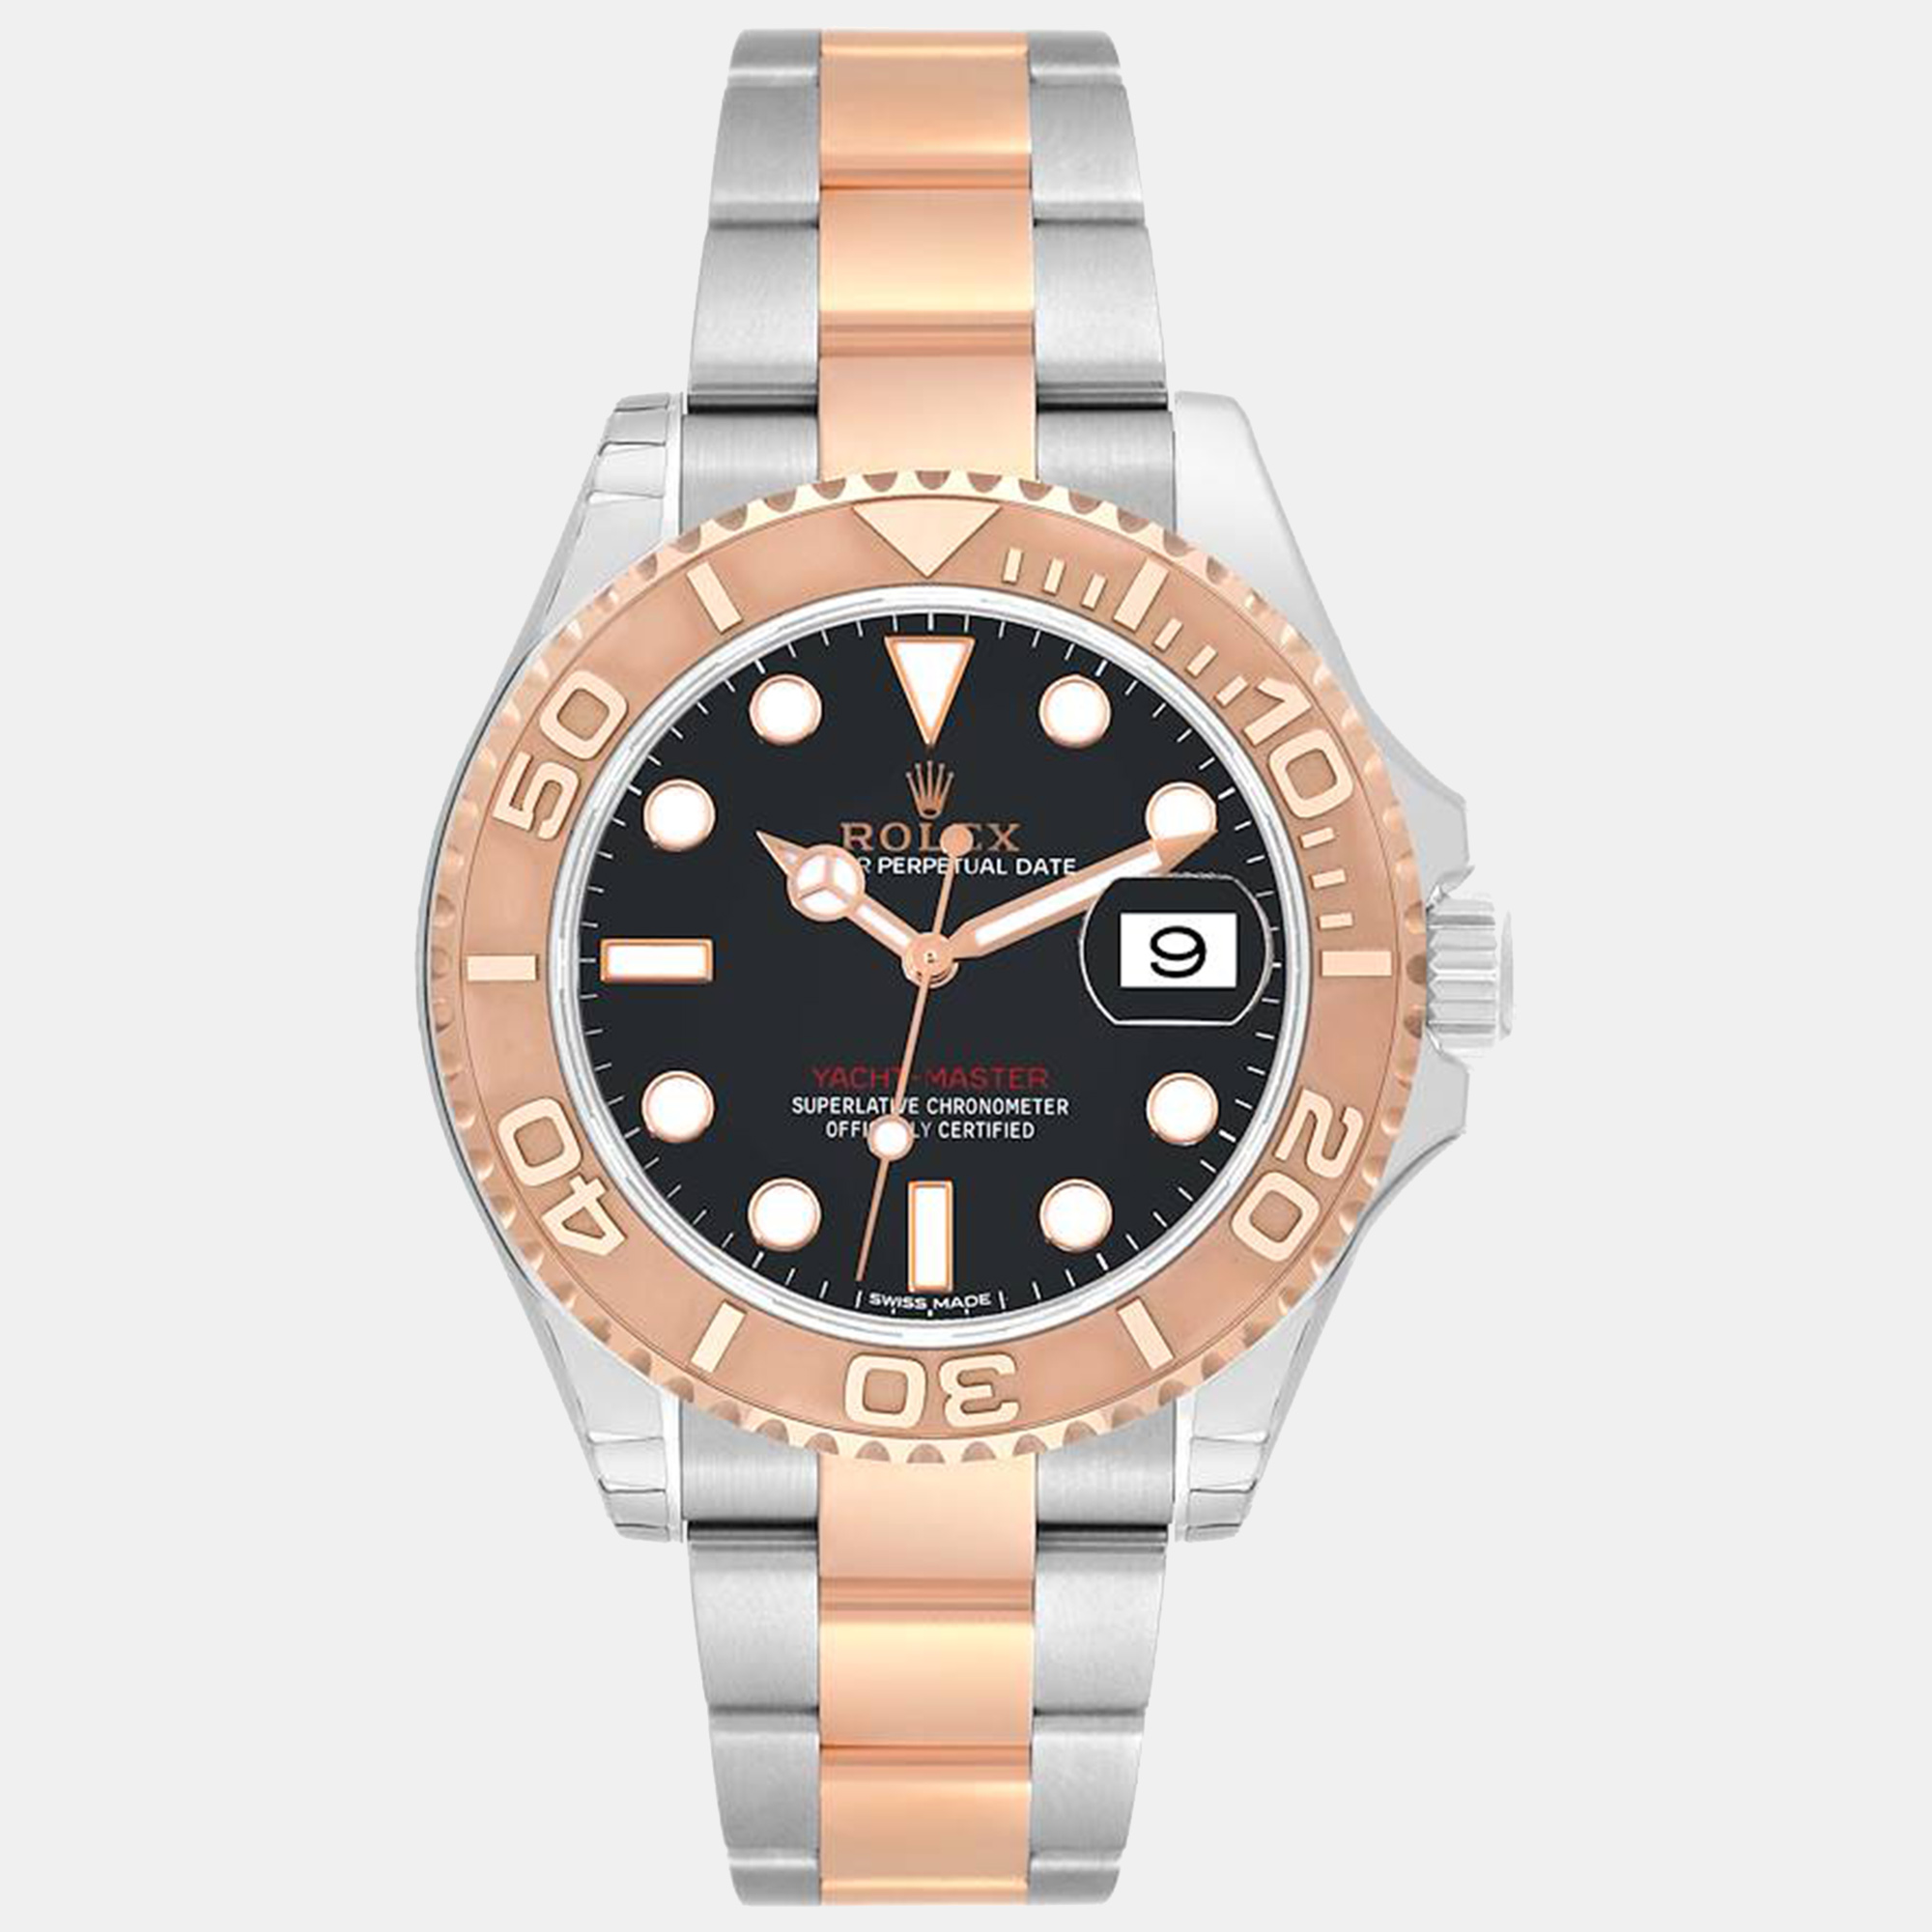 Rolex yachtmaster 18k rose gold steel black dial men's watch 116621 40 mm